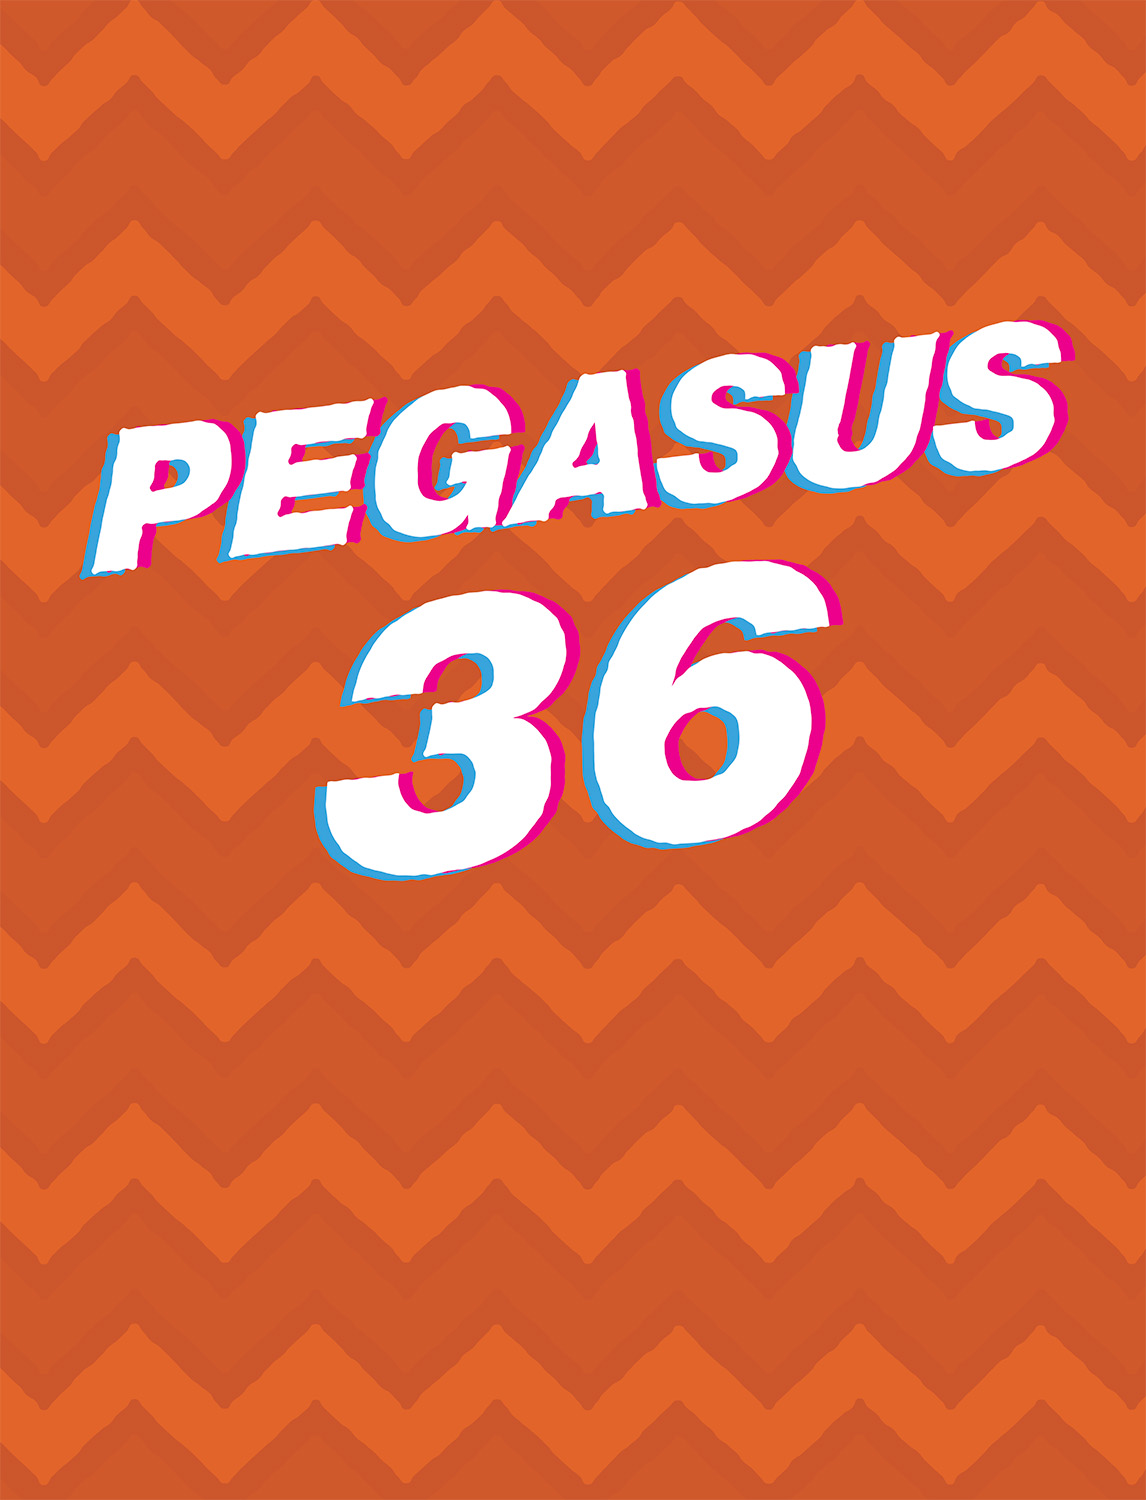 pegasus_3